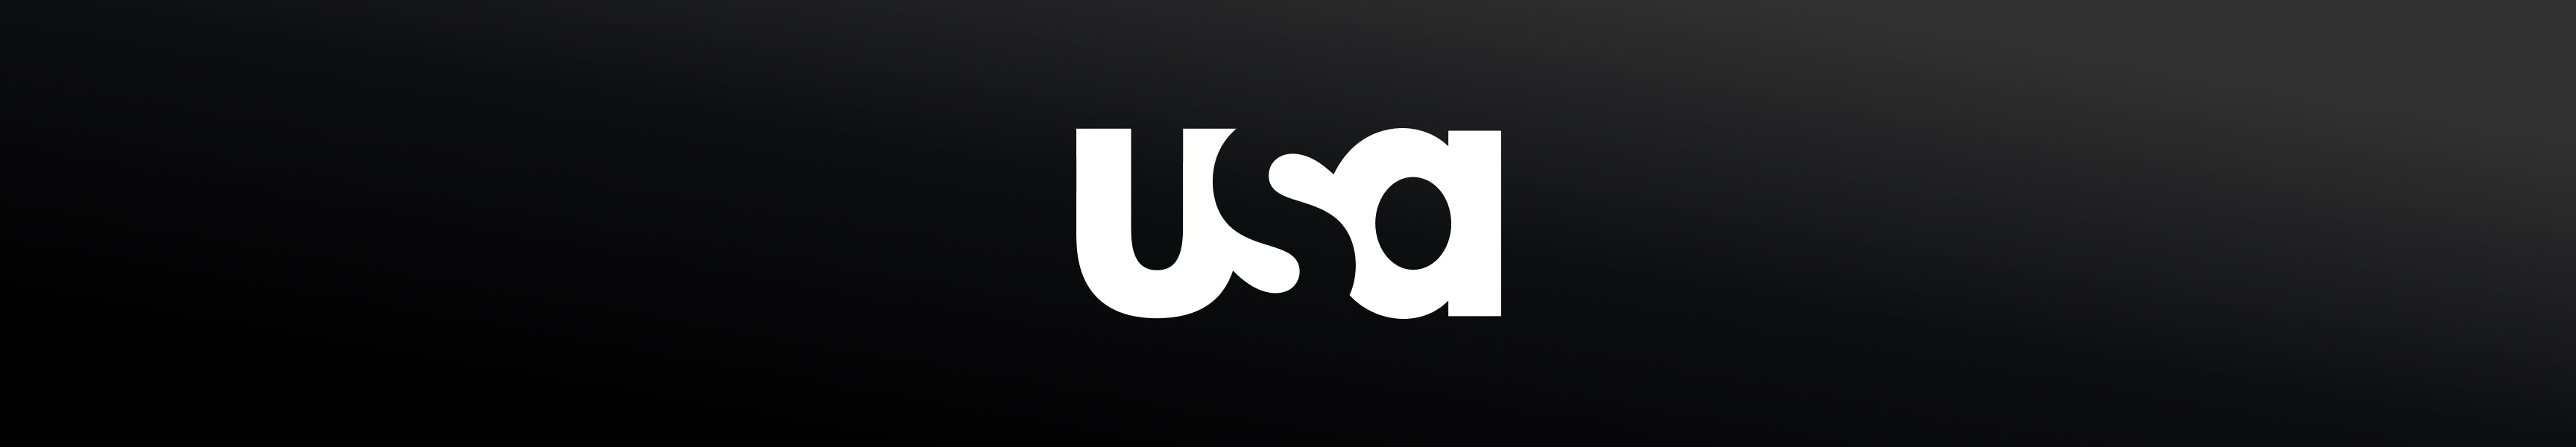 USA Network Clothing